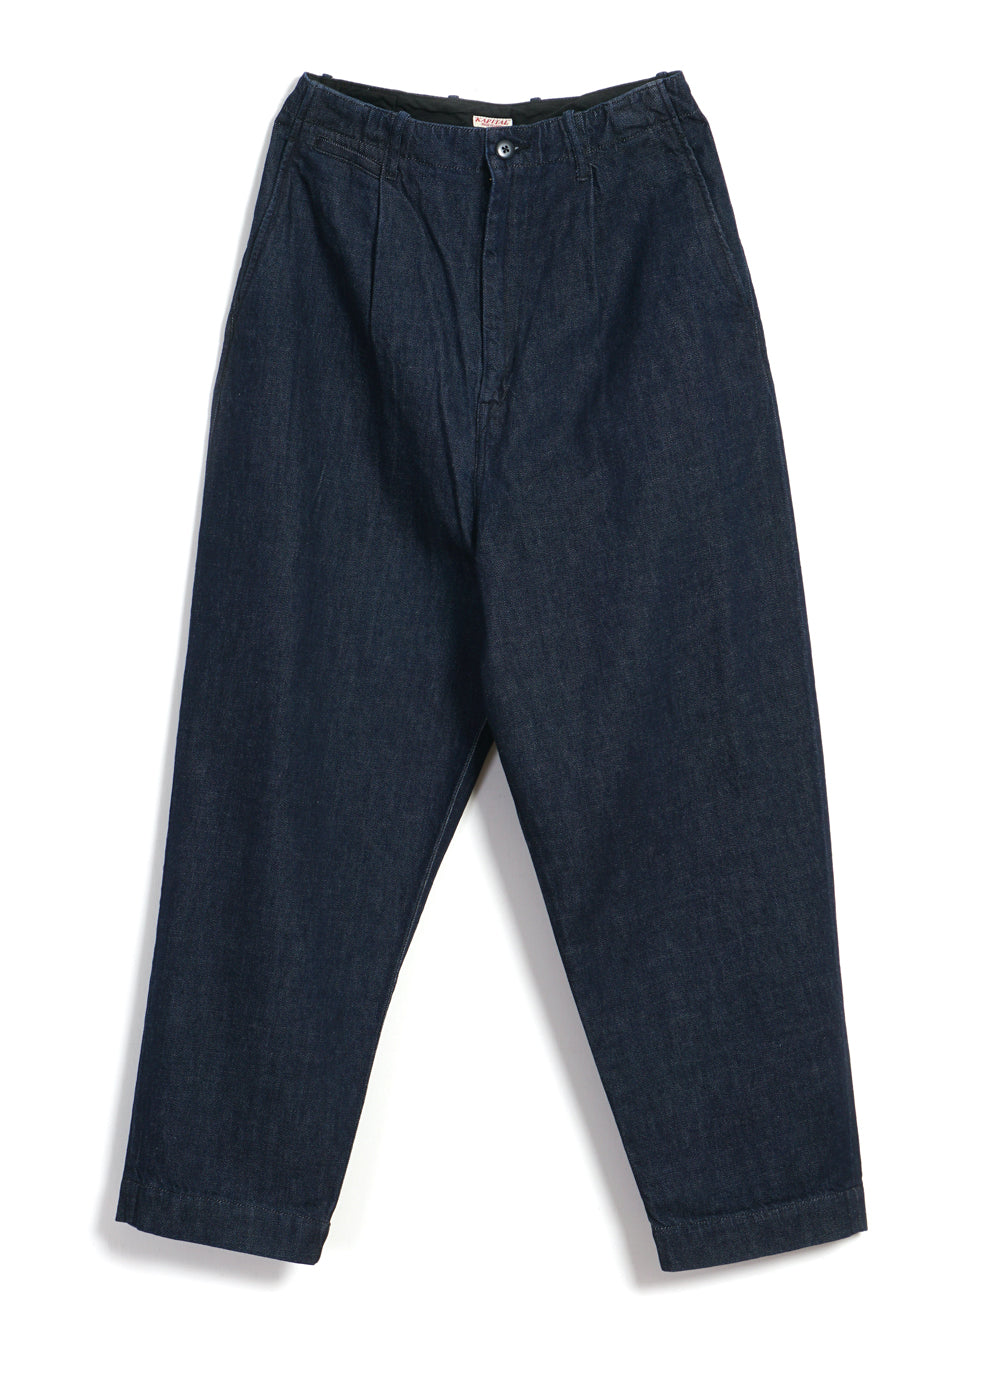 Trendy Dukaan Boys Hosiery Cotton Half Pants - Pack of 5 (Colours